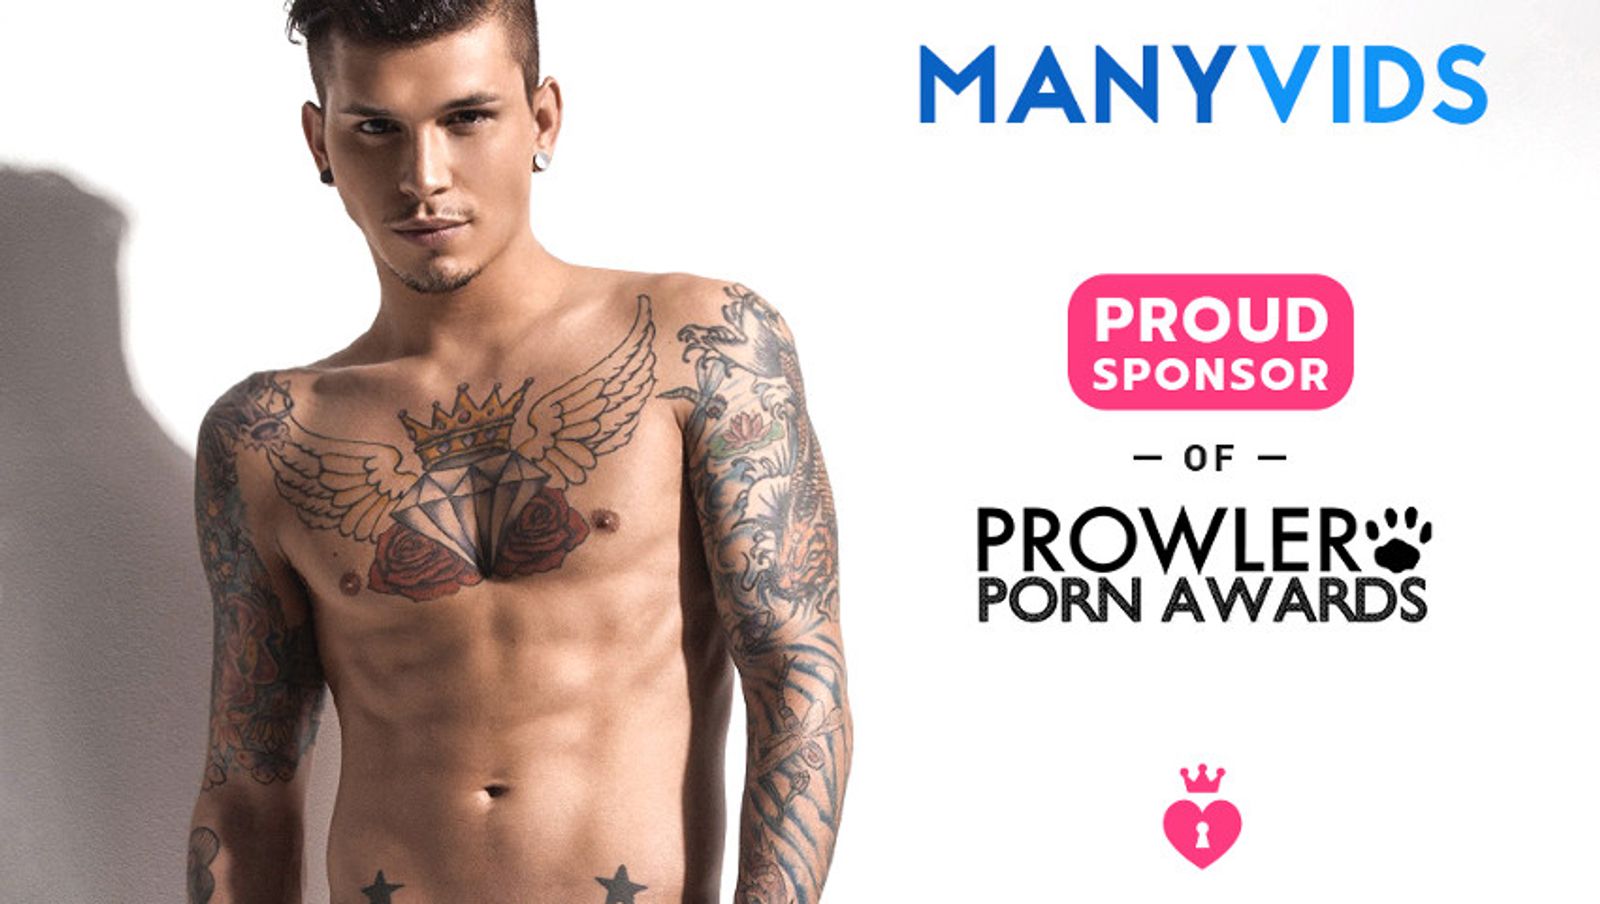 ManyVids to Sponsor 2018 Prowler European Porn Awards